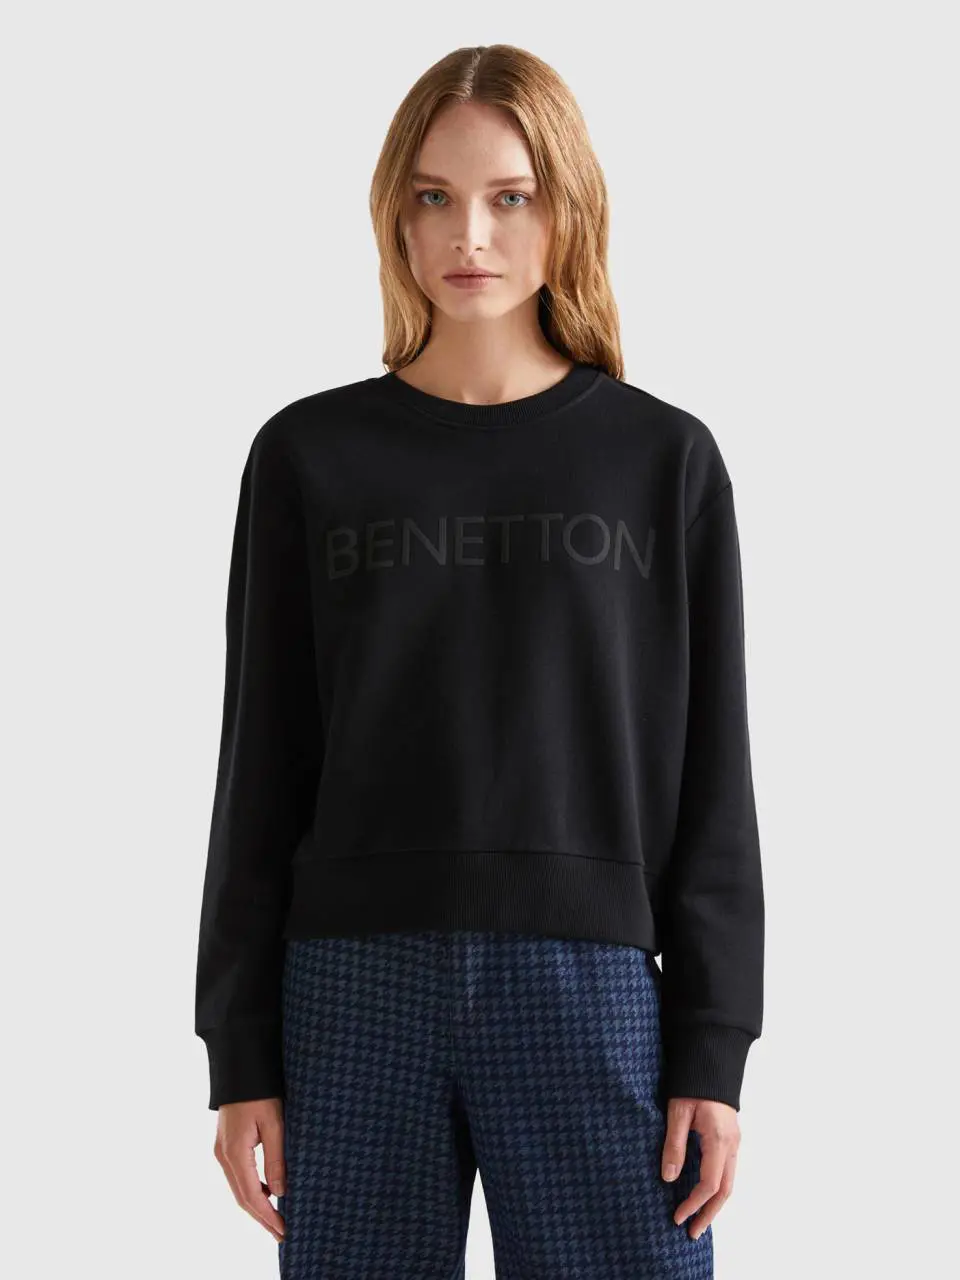 Benetton pullover sweatshirt with logo print. 1